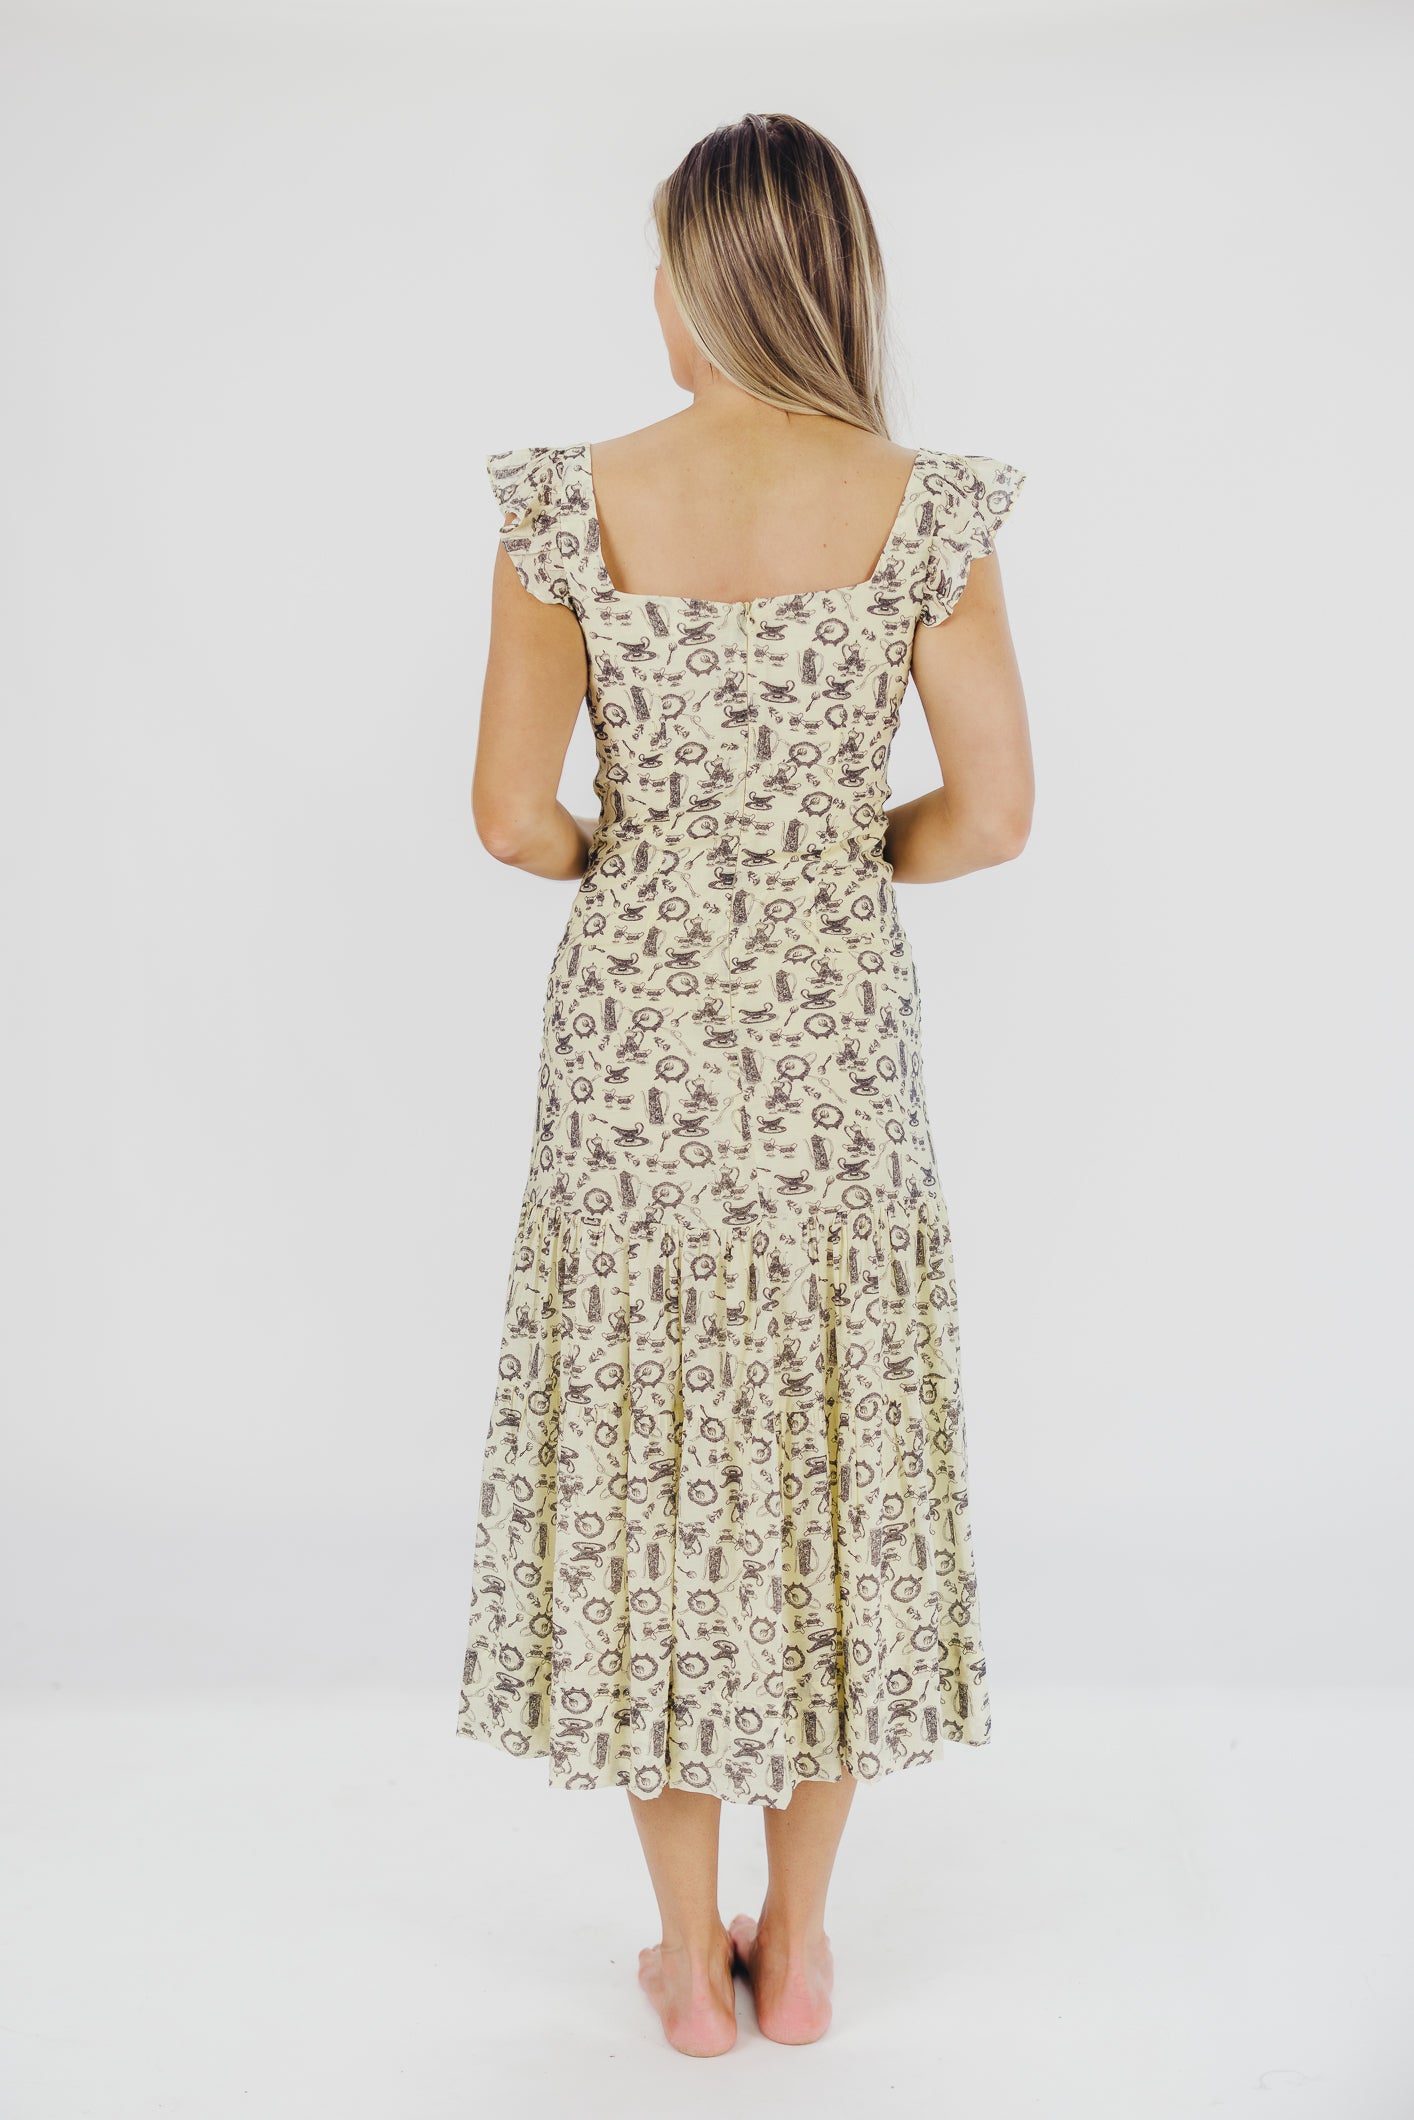 Emery Midi Dress in Vintage Tea -(Sizes S-XL)